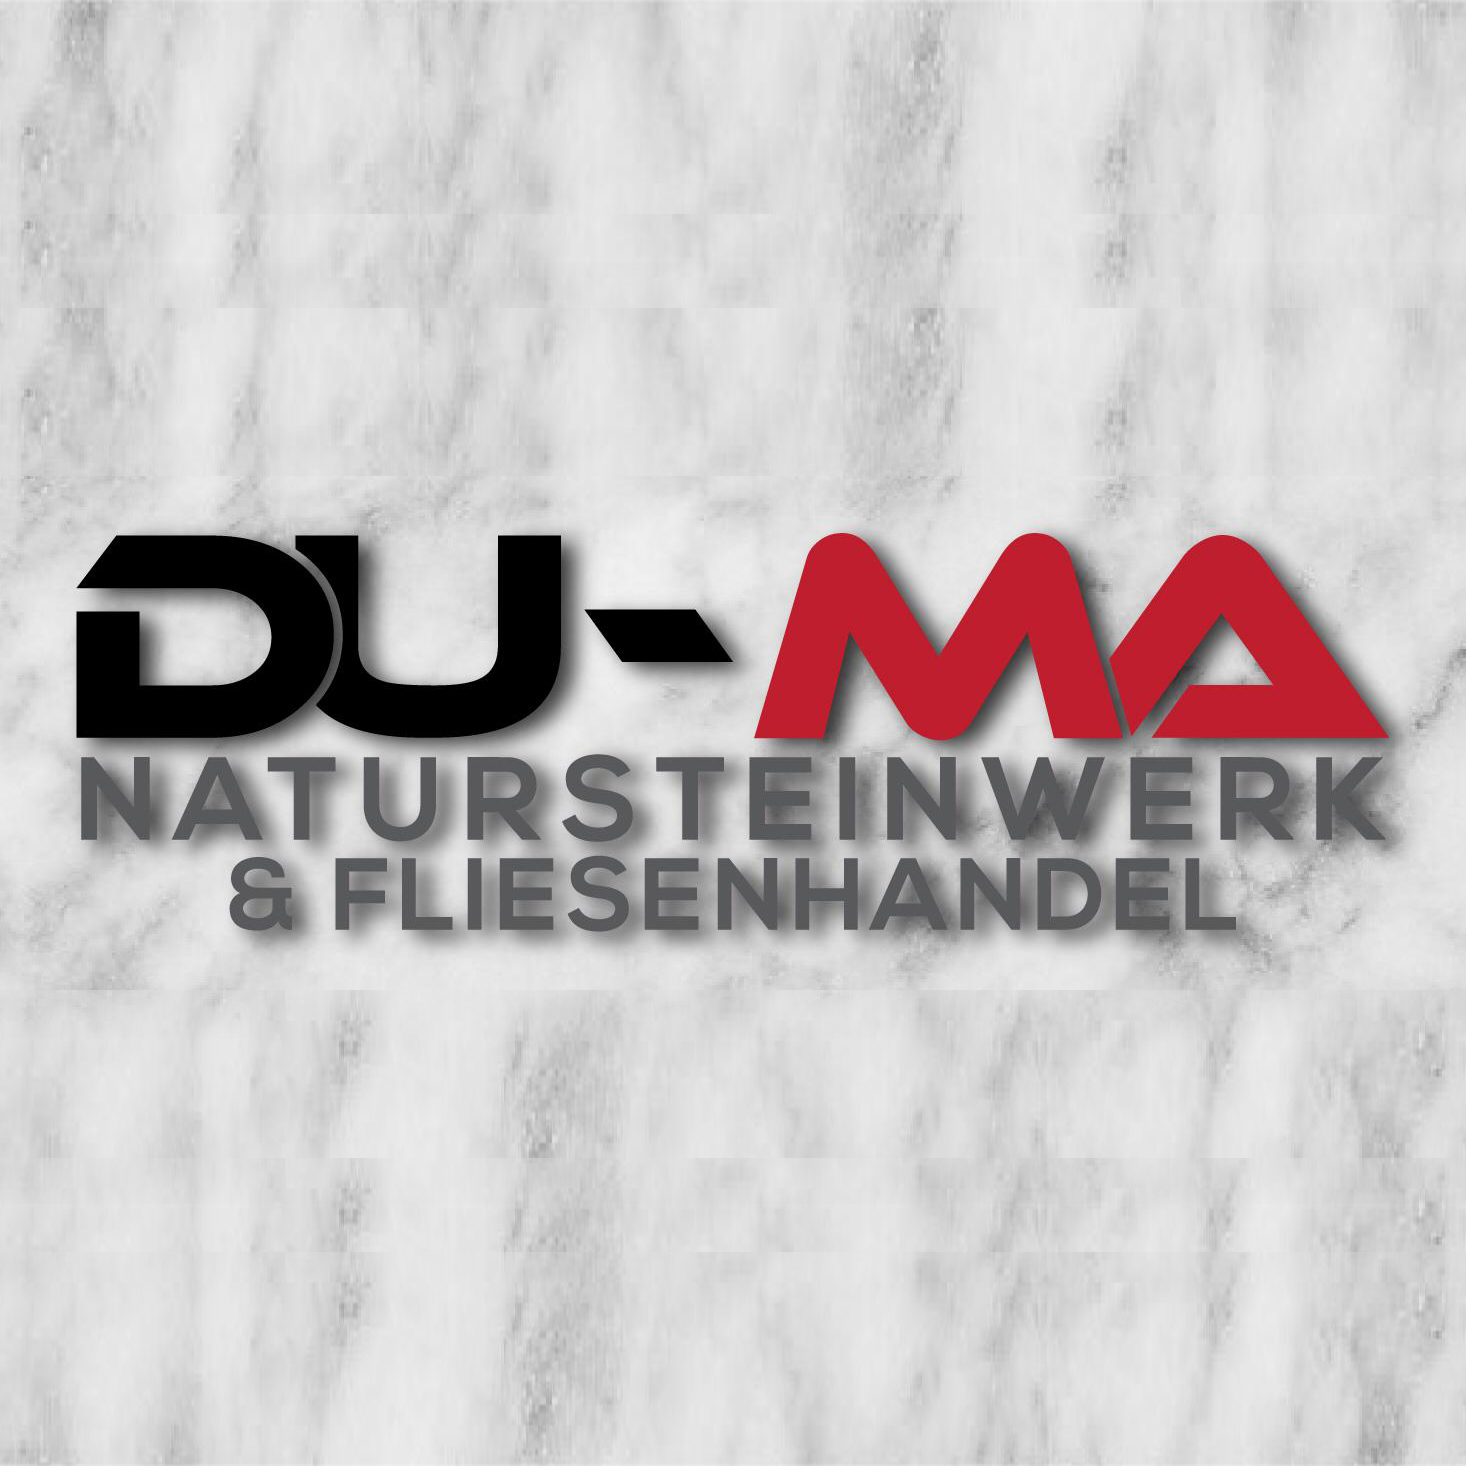 DU-MA Natursteinwerk & Fliesenhandel logo